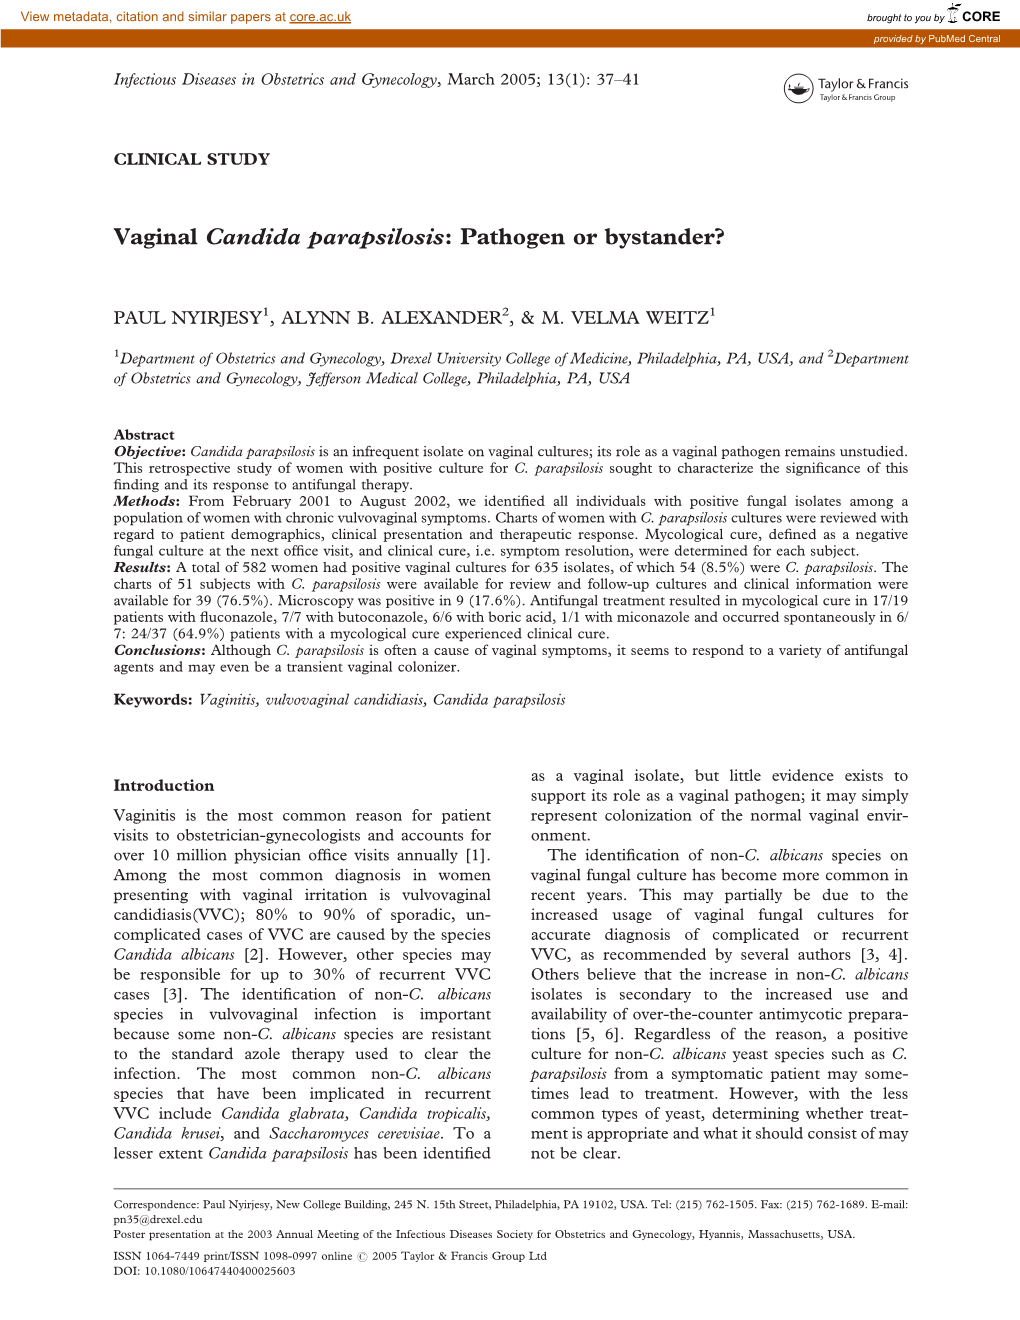 Vaginal Candida Parapsilosis: Pathogen Or Bystander?